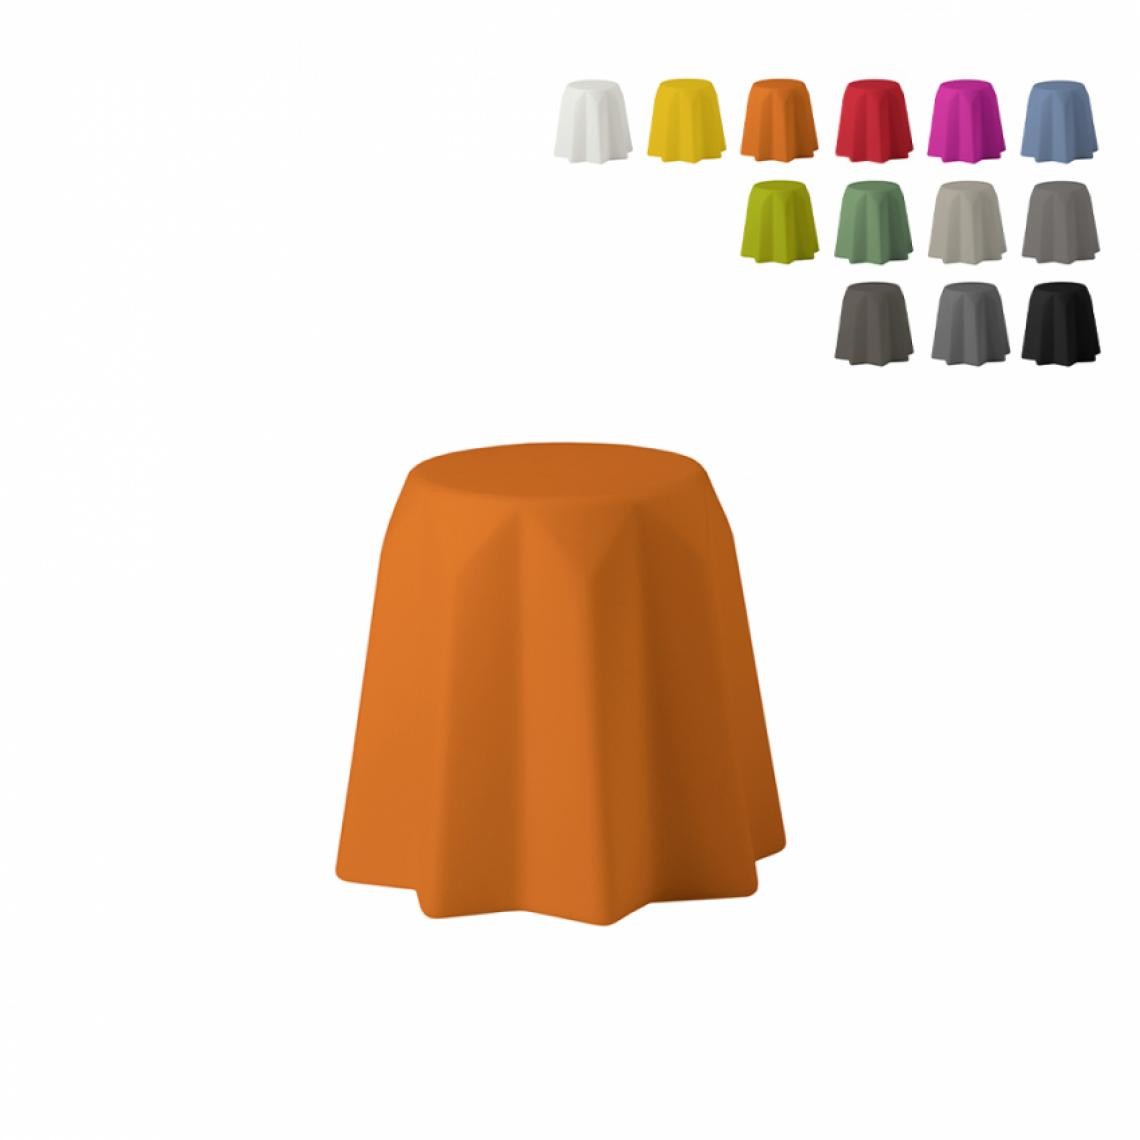 Slide - Tabouret bas polyéthylène au design moderne extravagant Slide Pandoro, Couleur: Orange - Tabourets